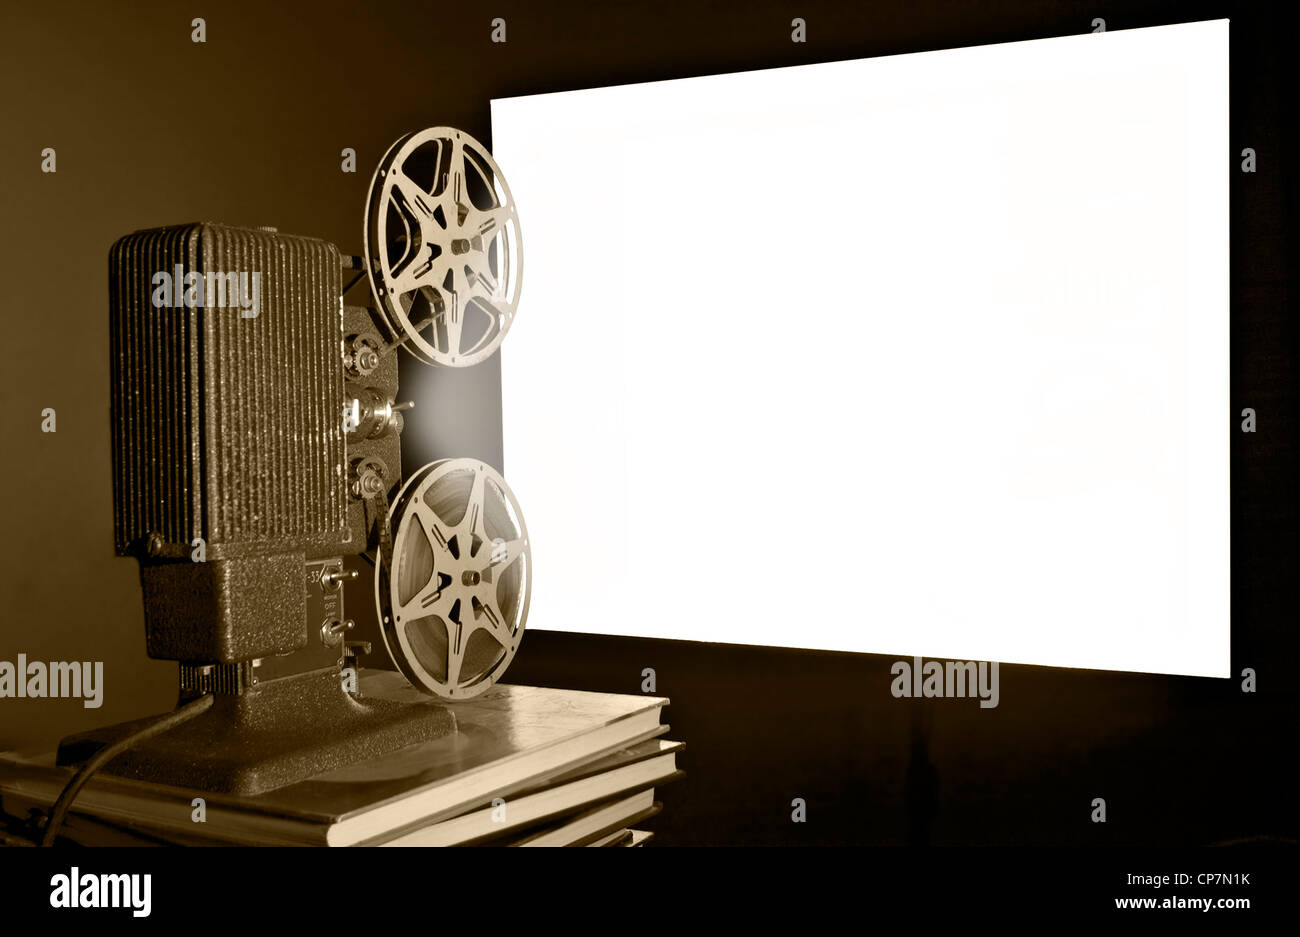 https://c8.alamy.com/comp/CP7N1K/a-vintage-reel-to-reel-film-movie-projector-shot-in-a-home-setting-CP7N1K.jpg